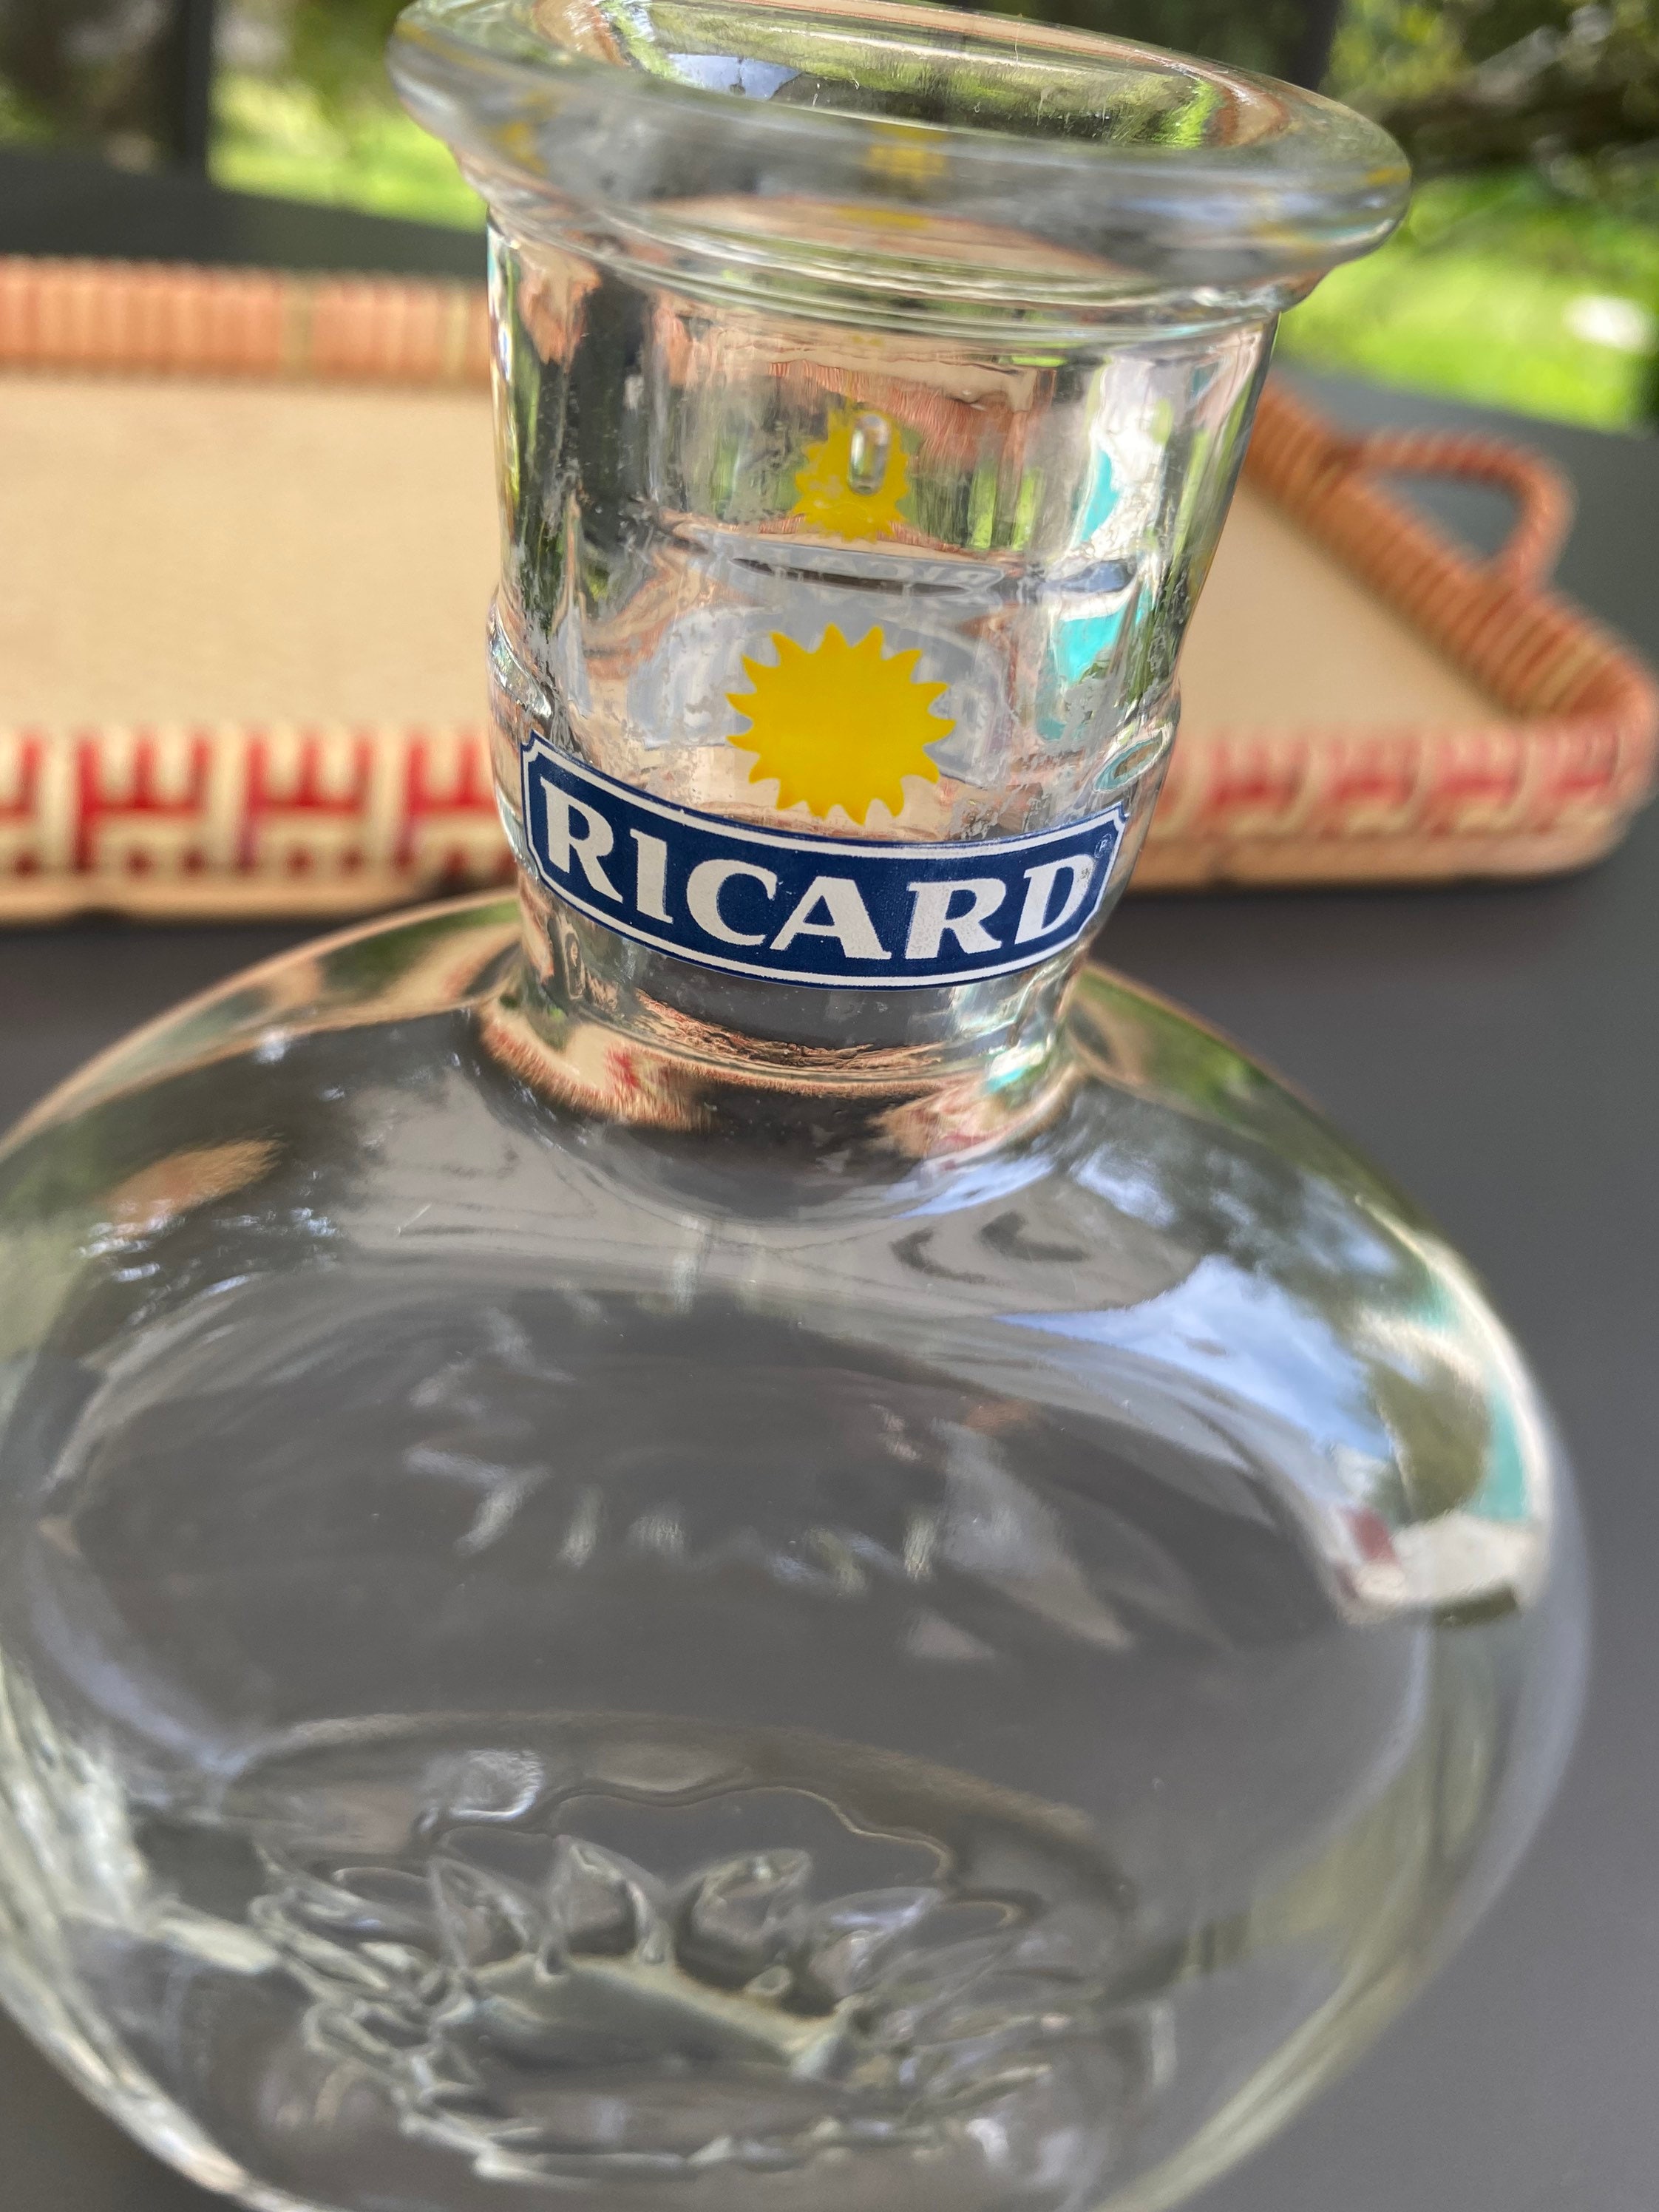 2 carafes Anis Ricard et 8 verres Ricard collector année 60